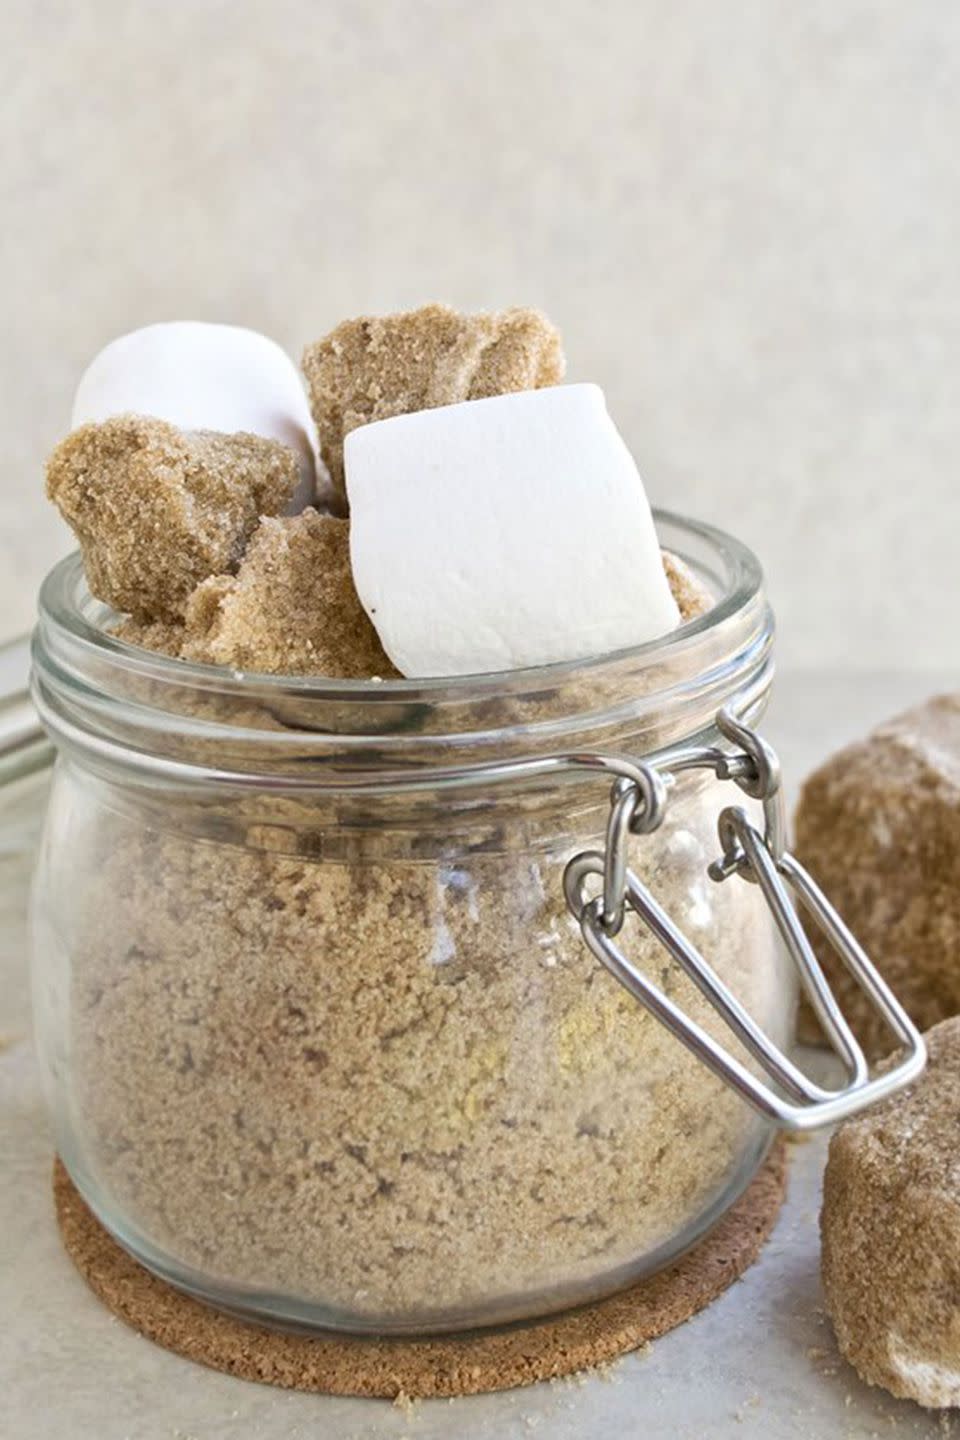 Soften rock-hard brown sugar with a marshmallow.